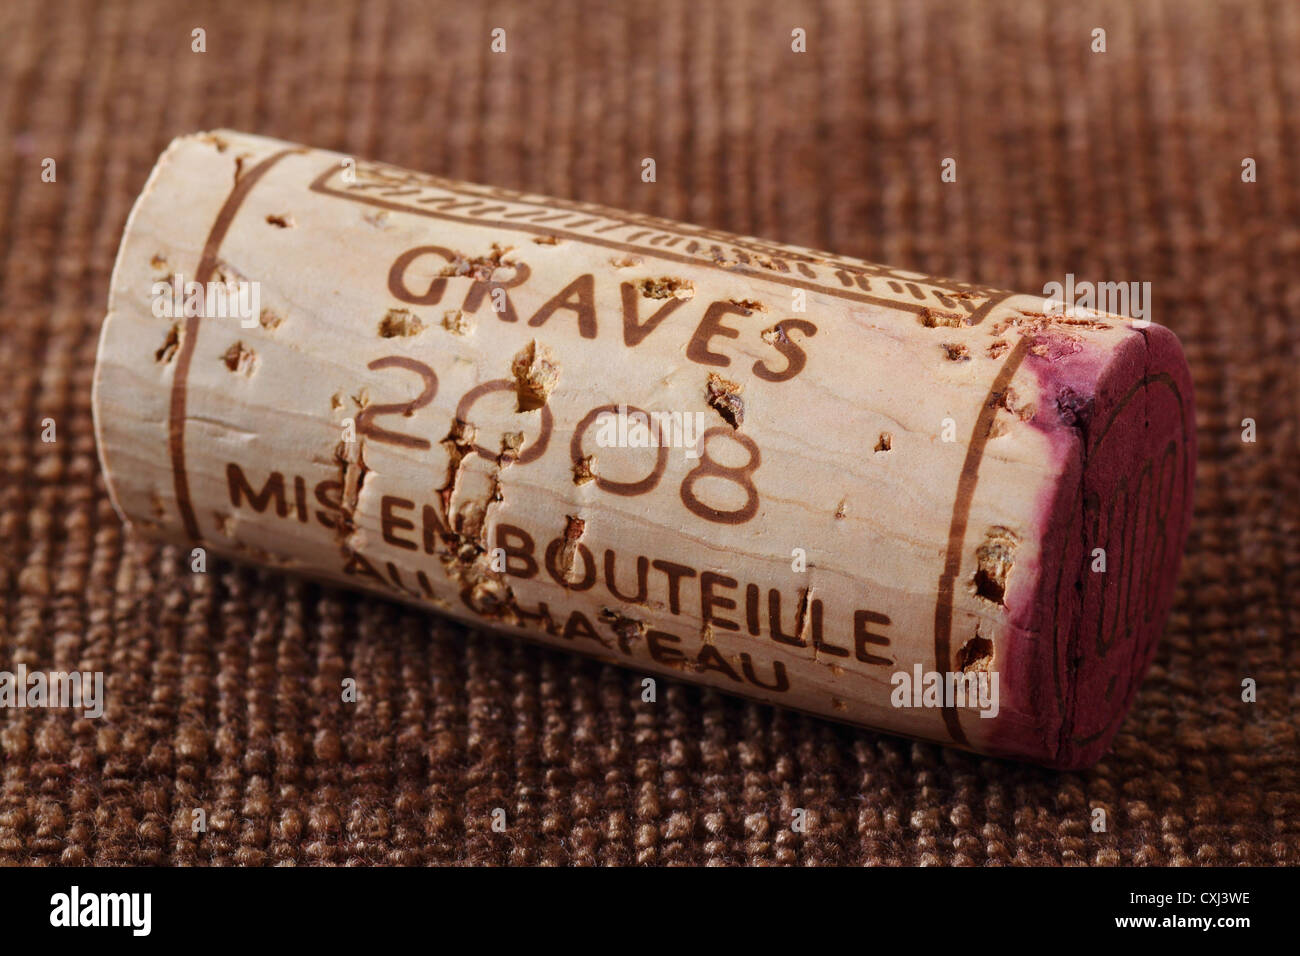 Apellation Graves 2008 Bordeaux wine cork stopper Stock Photo